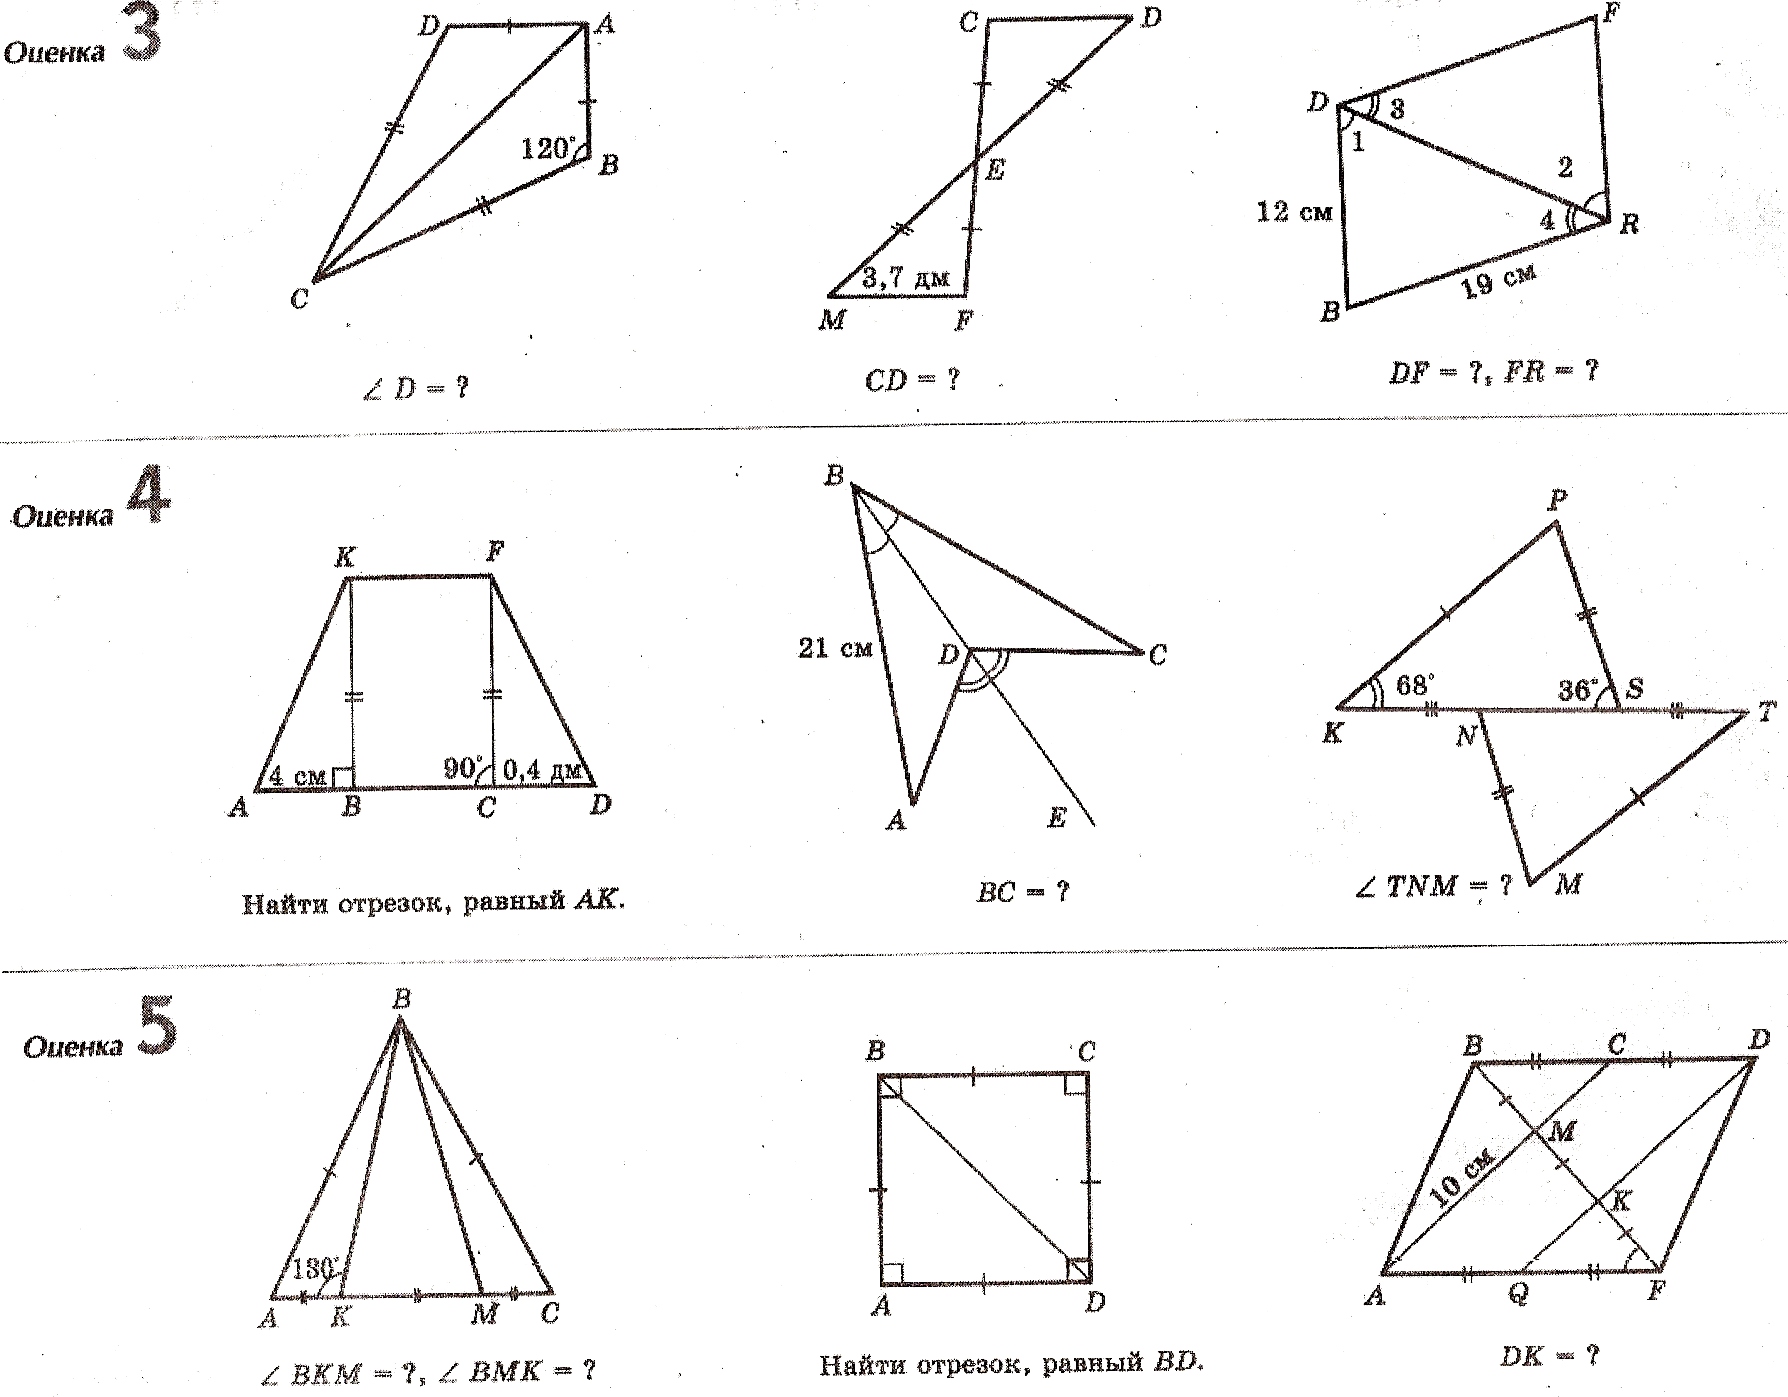 Первое равенство треугольников задачи. Задачи на равенство треугольников 7 класс. Задачи на признаки равенства треугольников 7 класс. Геометрические задачи на равенство треугольников 7 класс. Задачи на готовых чертежах равенство треугольников геометрия 7 класс.